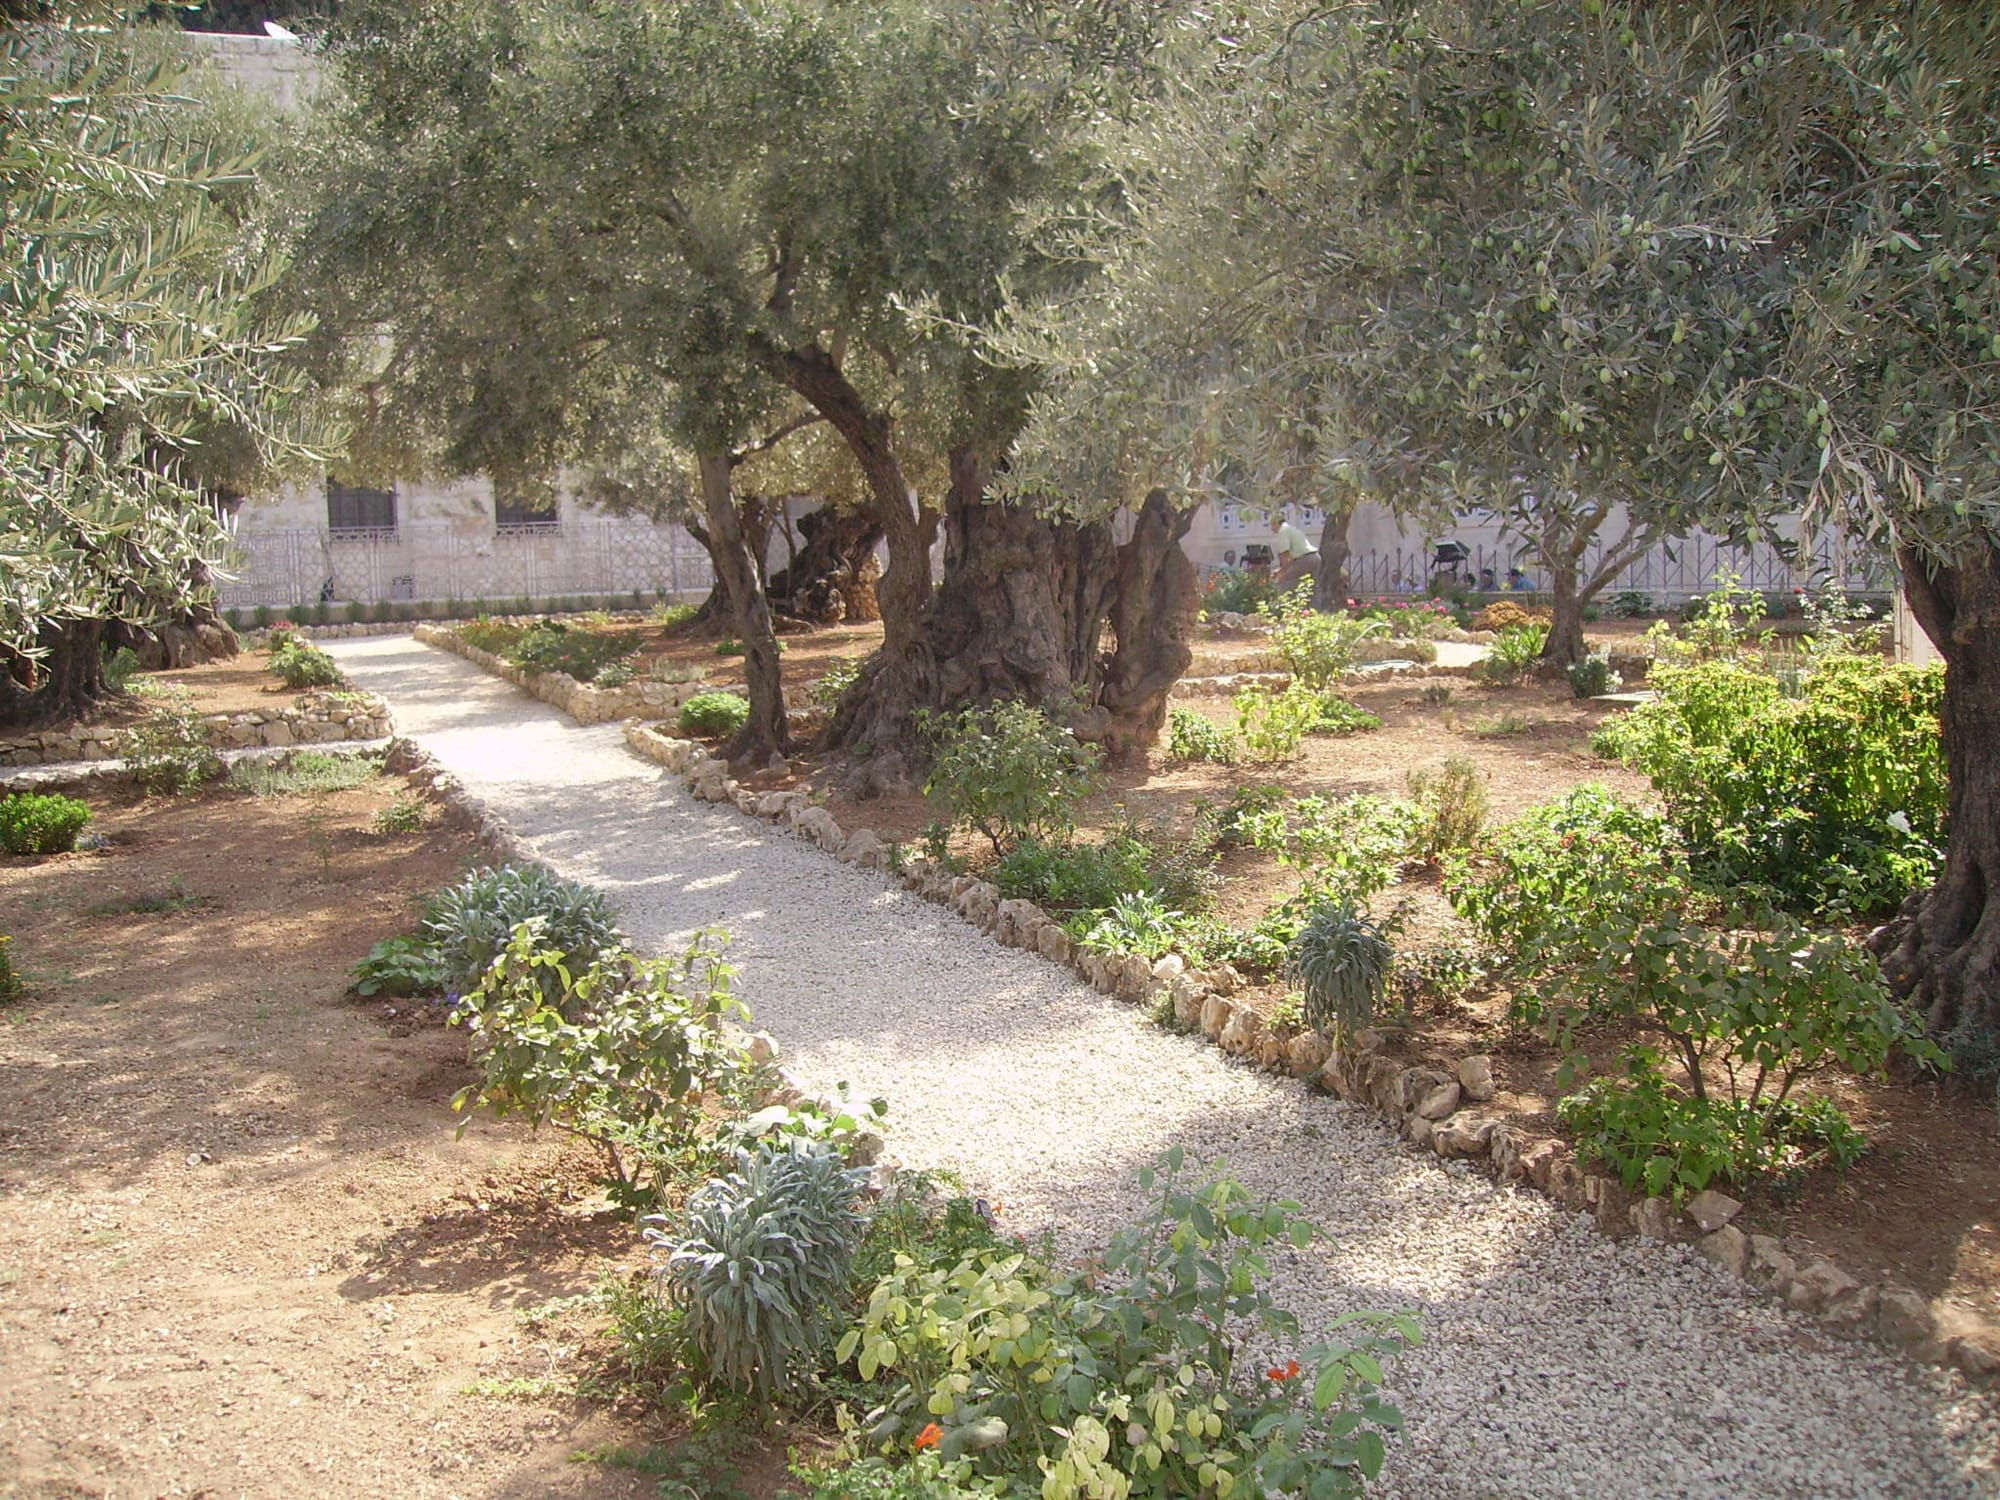 The Garden of Gethsemene